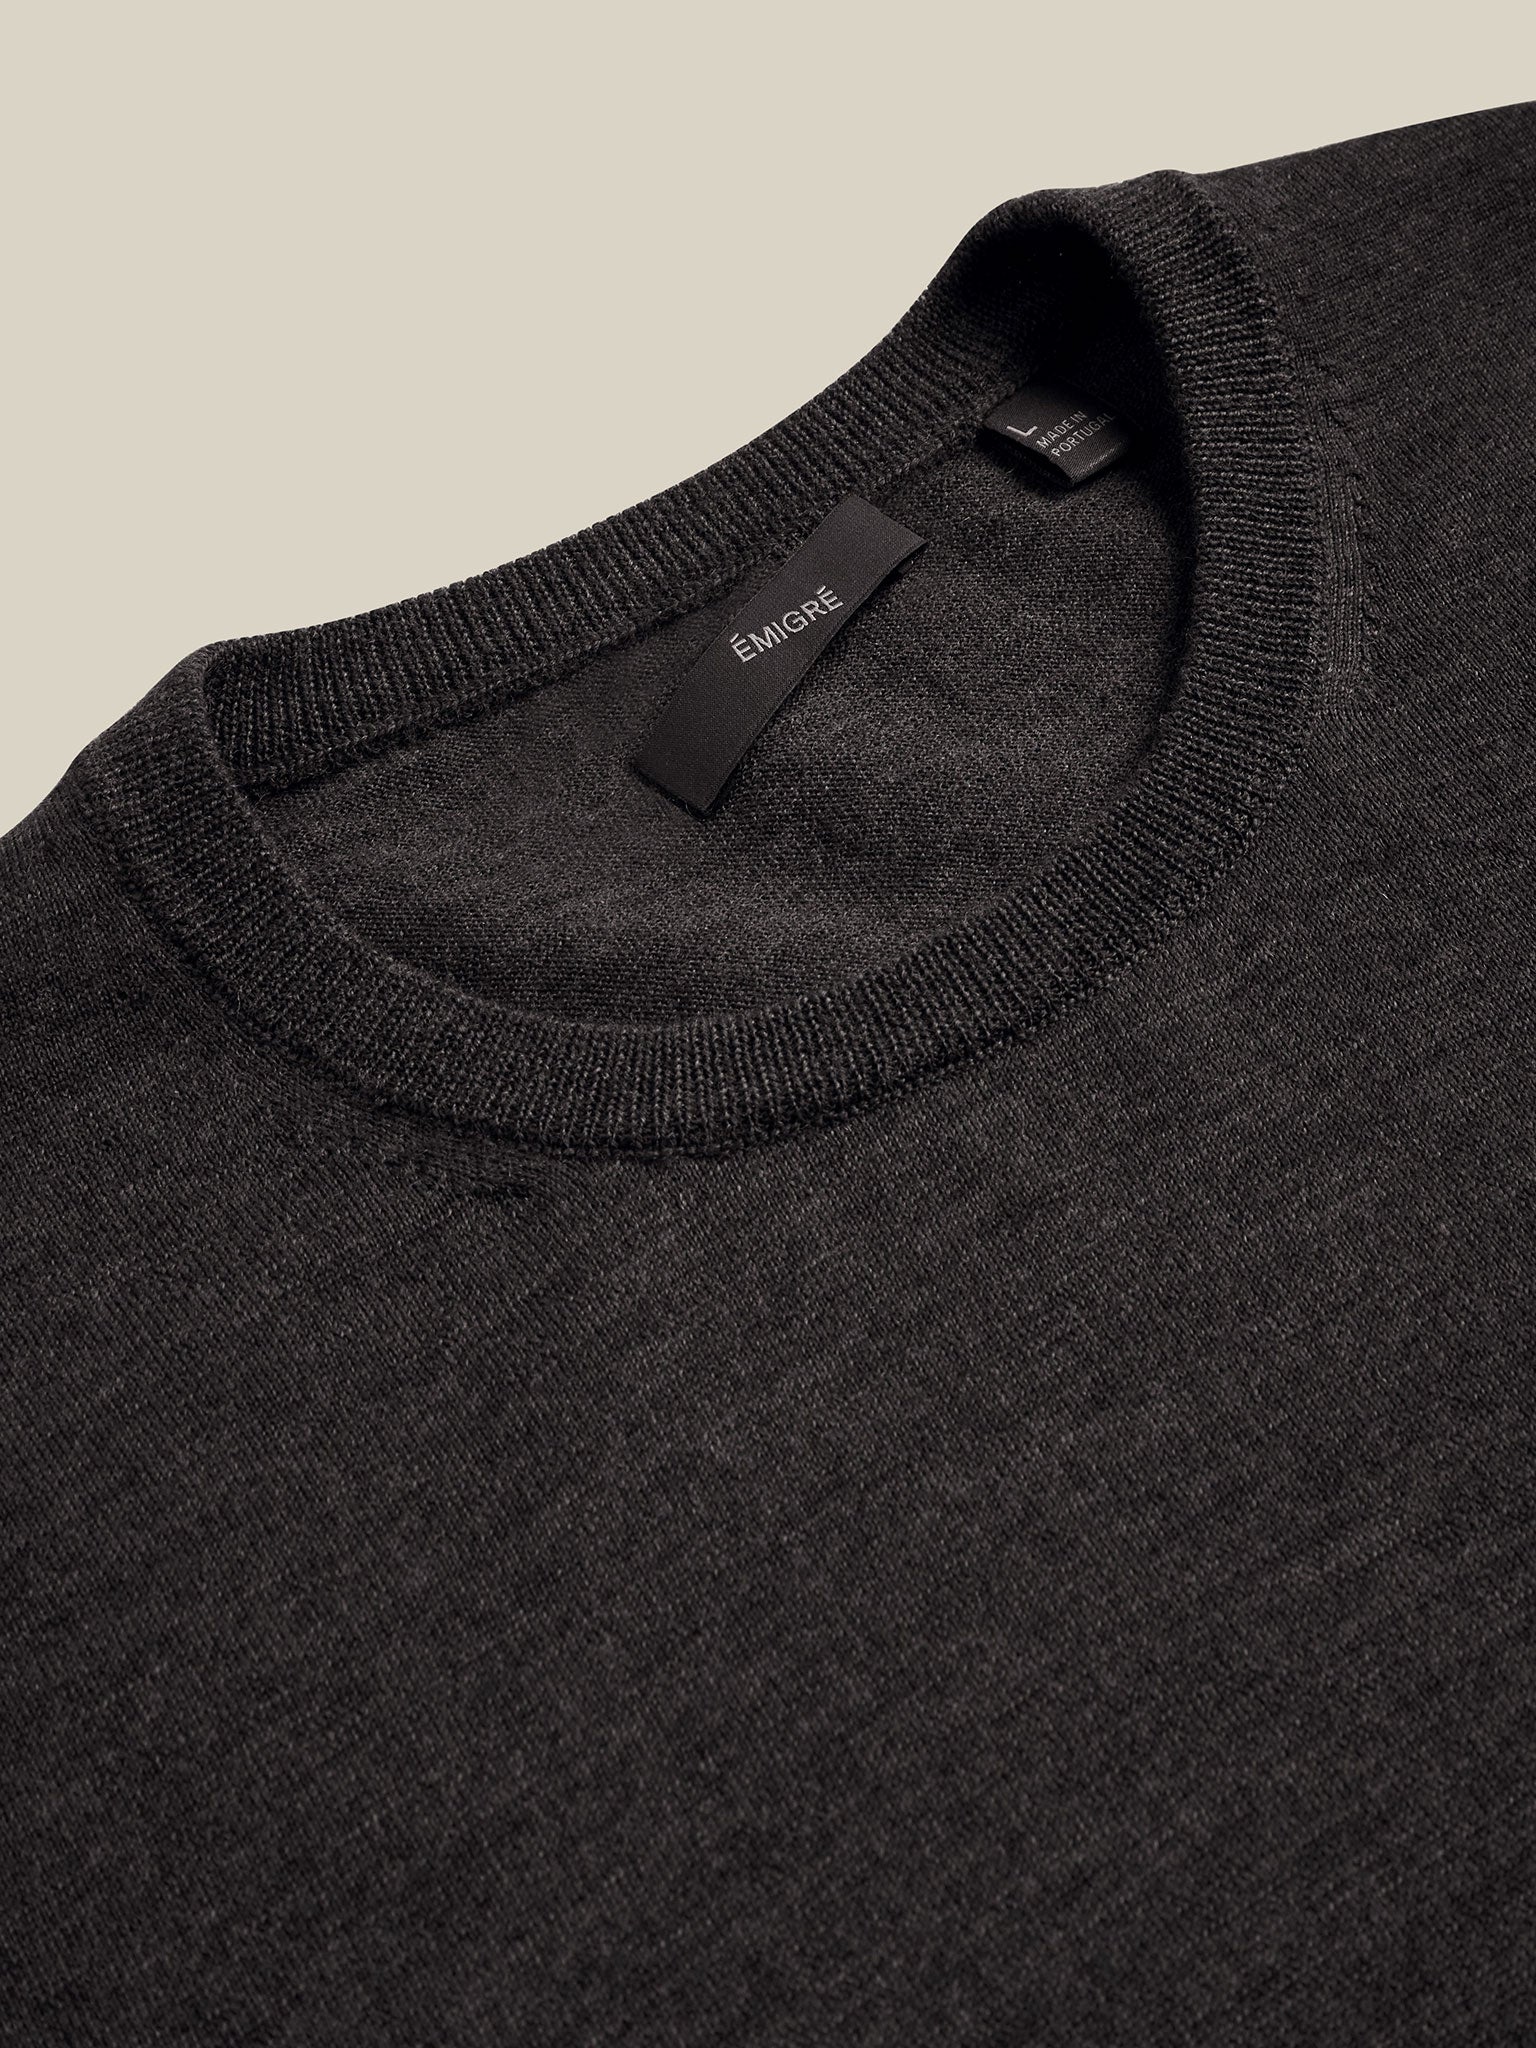 grey merino wool jumper - Versatile, sharp and easy.